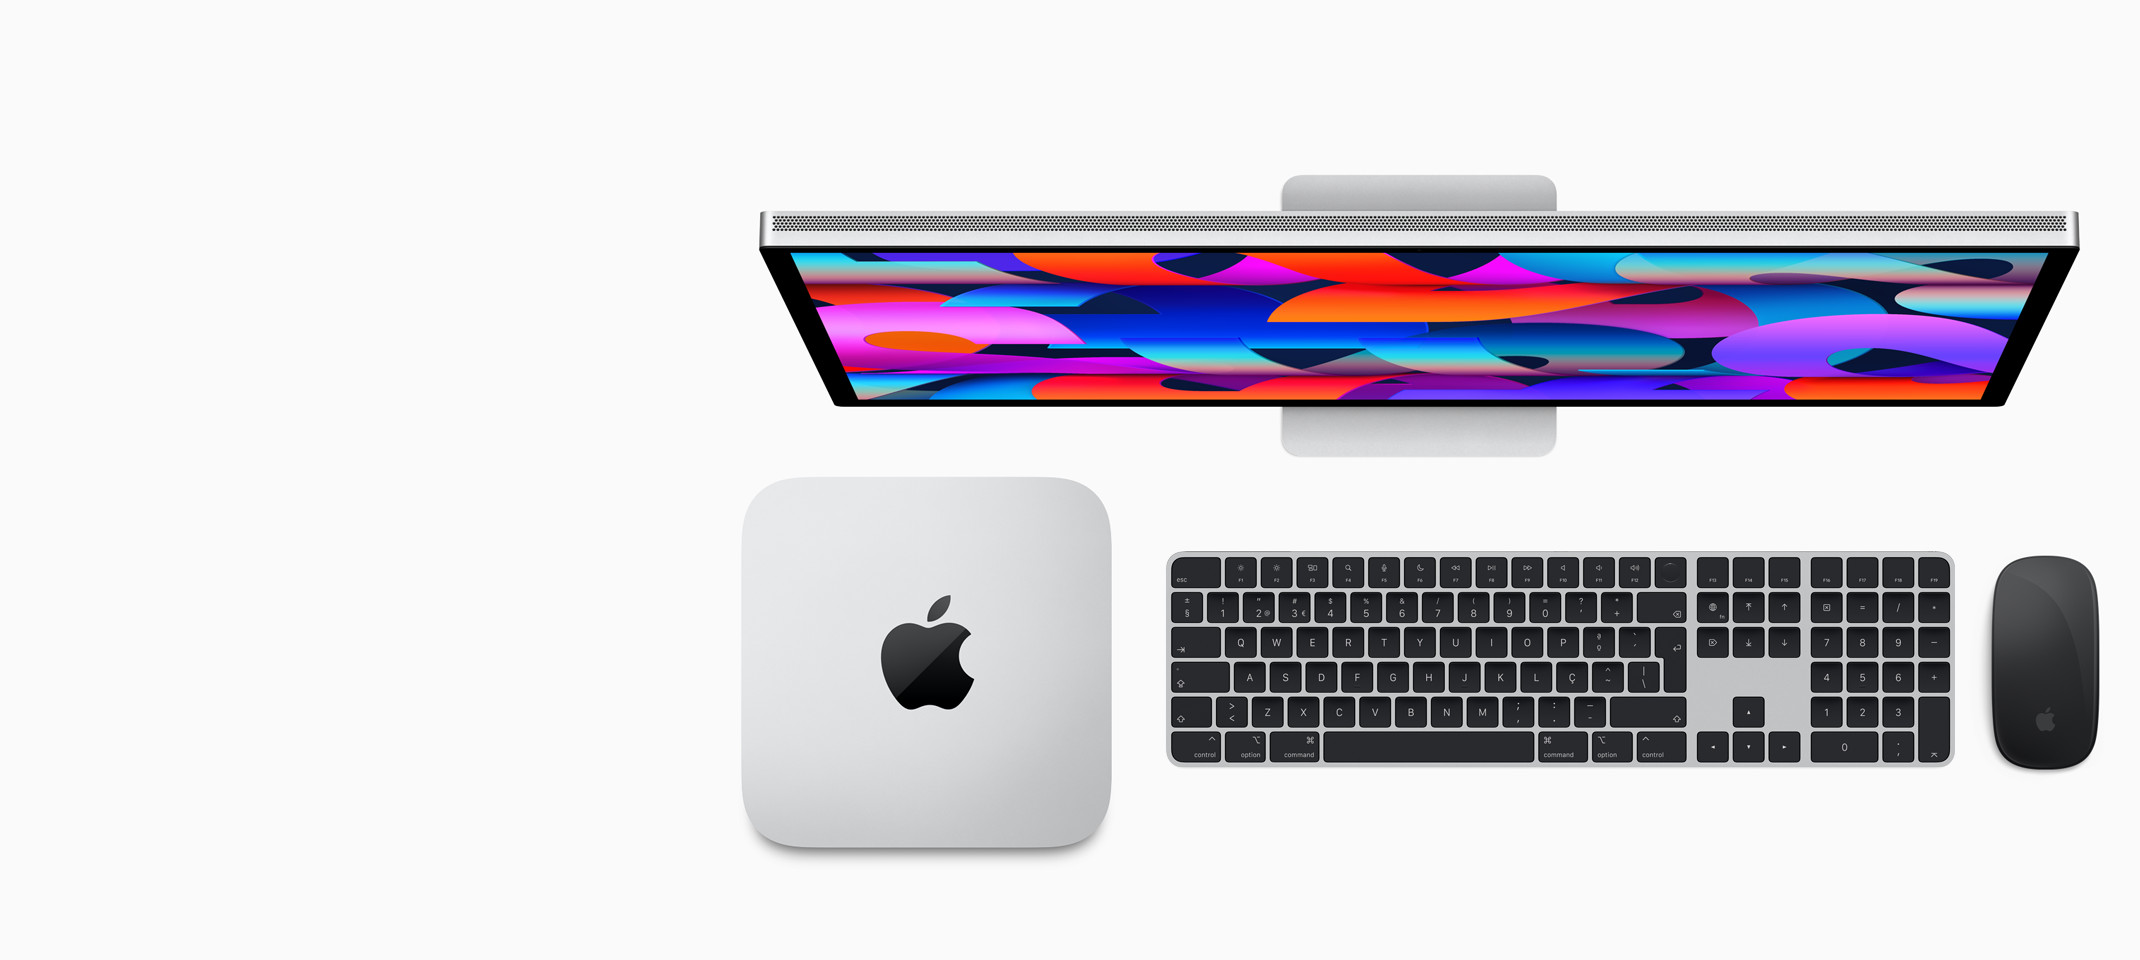 Studio Display, Mac Studio, Magic Mouse e Magic Keyboard com Touch ID e teclado numérico